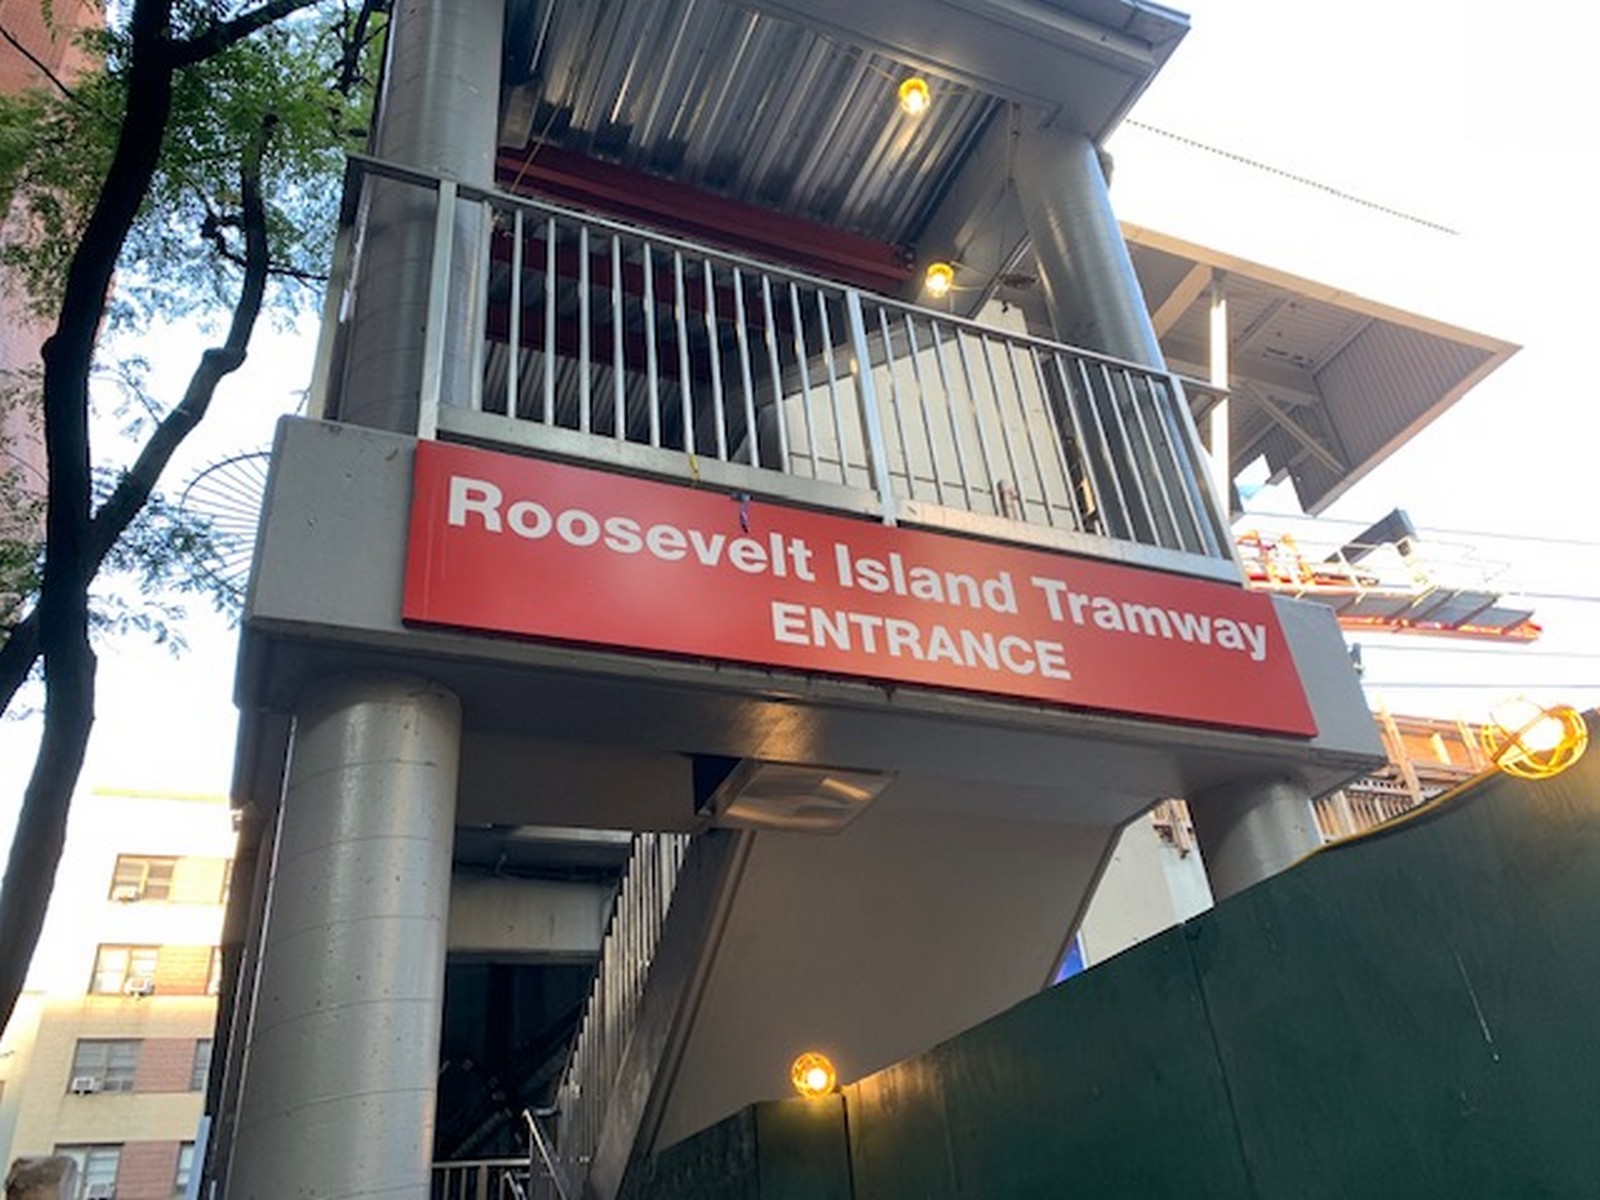 Visit Roosevelt Island